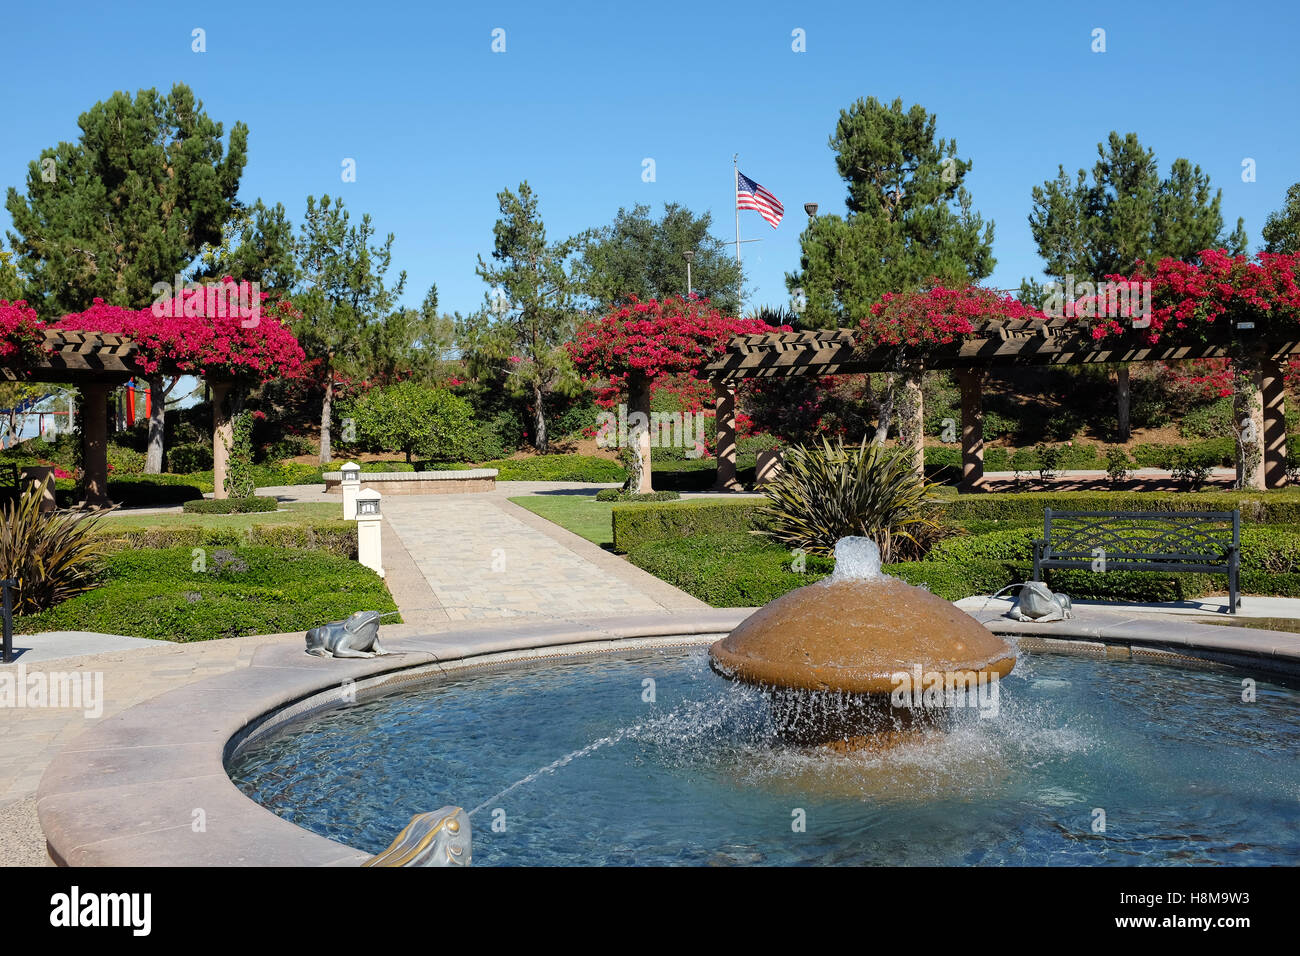 Fountain in the Formal Garden at Bill Barber Park, Irvine, California. Stock Photo